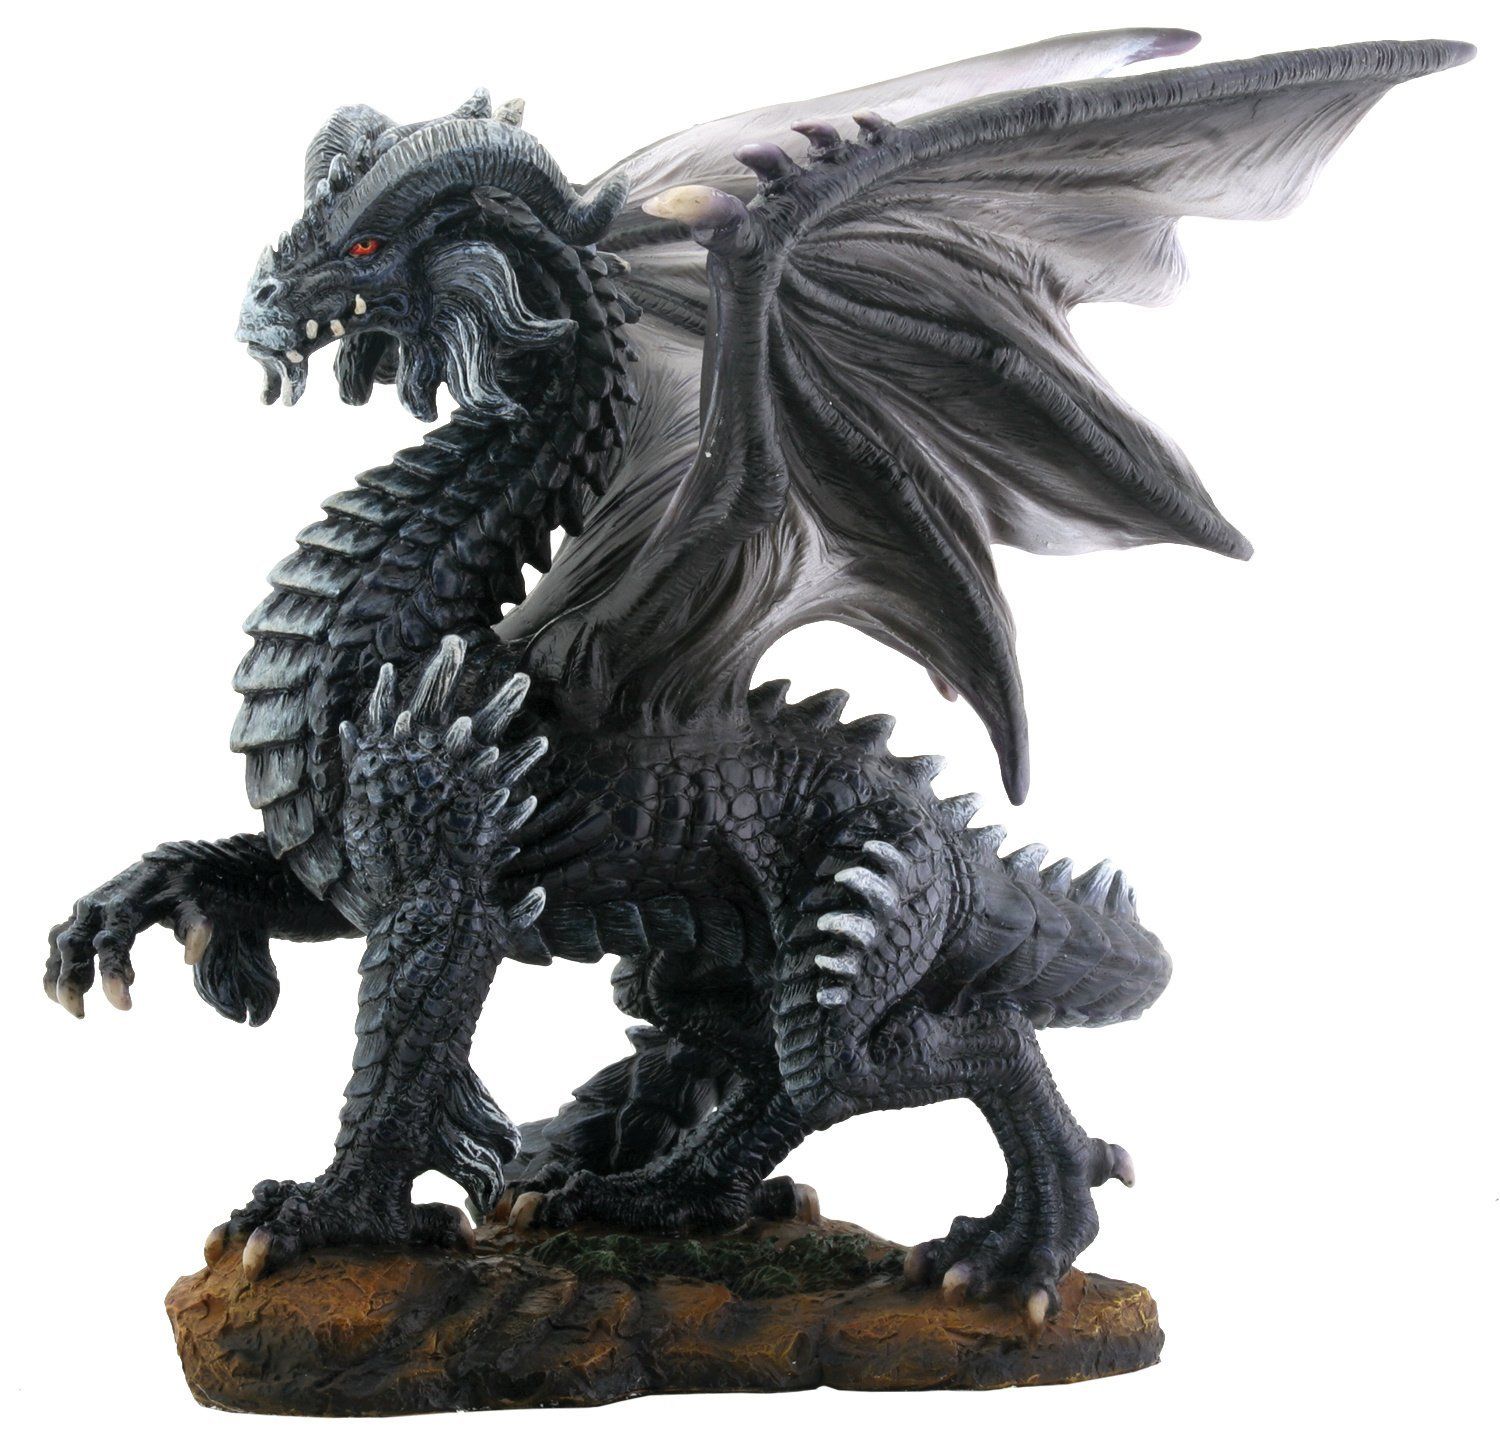 Dark Dragon Statue Figurine Display: Amazon.ca: Home & Kitchen ...